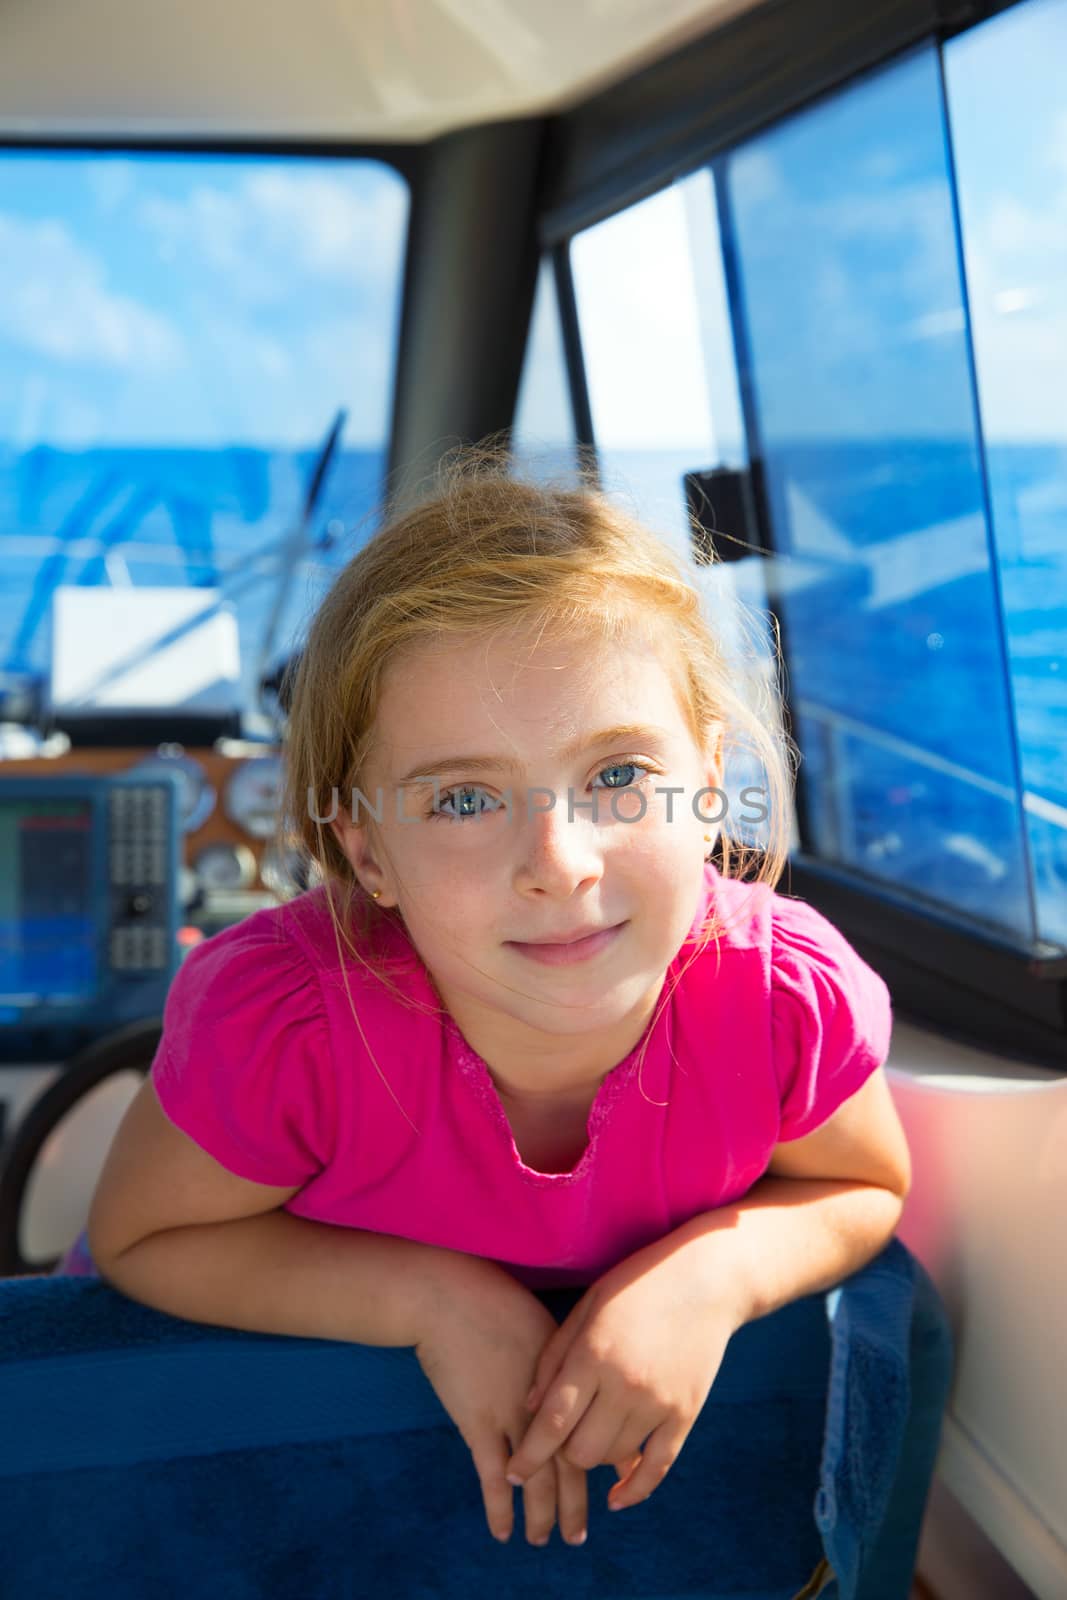 Blond kid girl at boat indoor sailing smiling happy by lunamarina